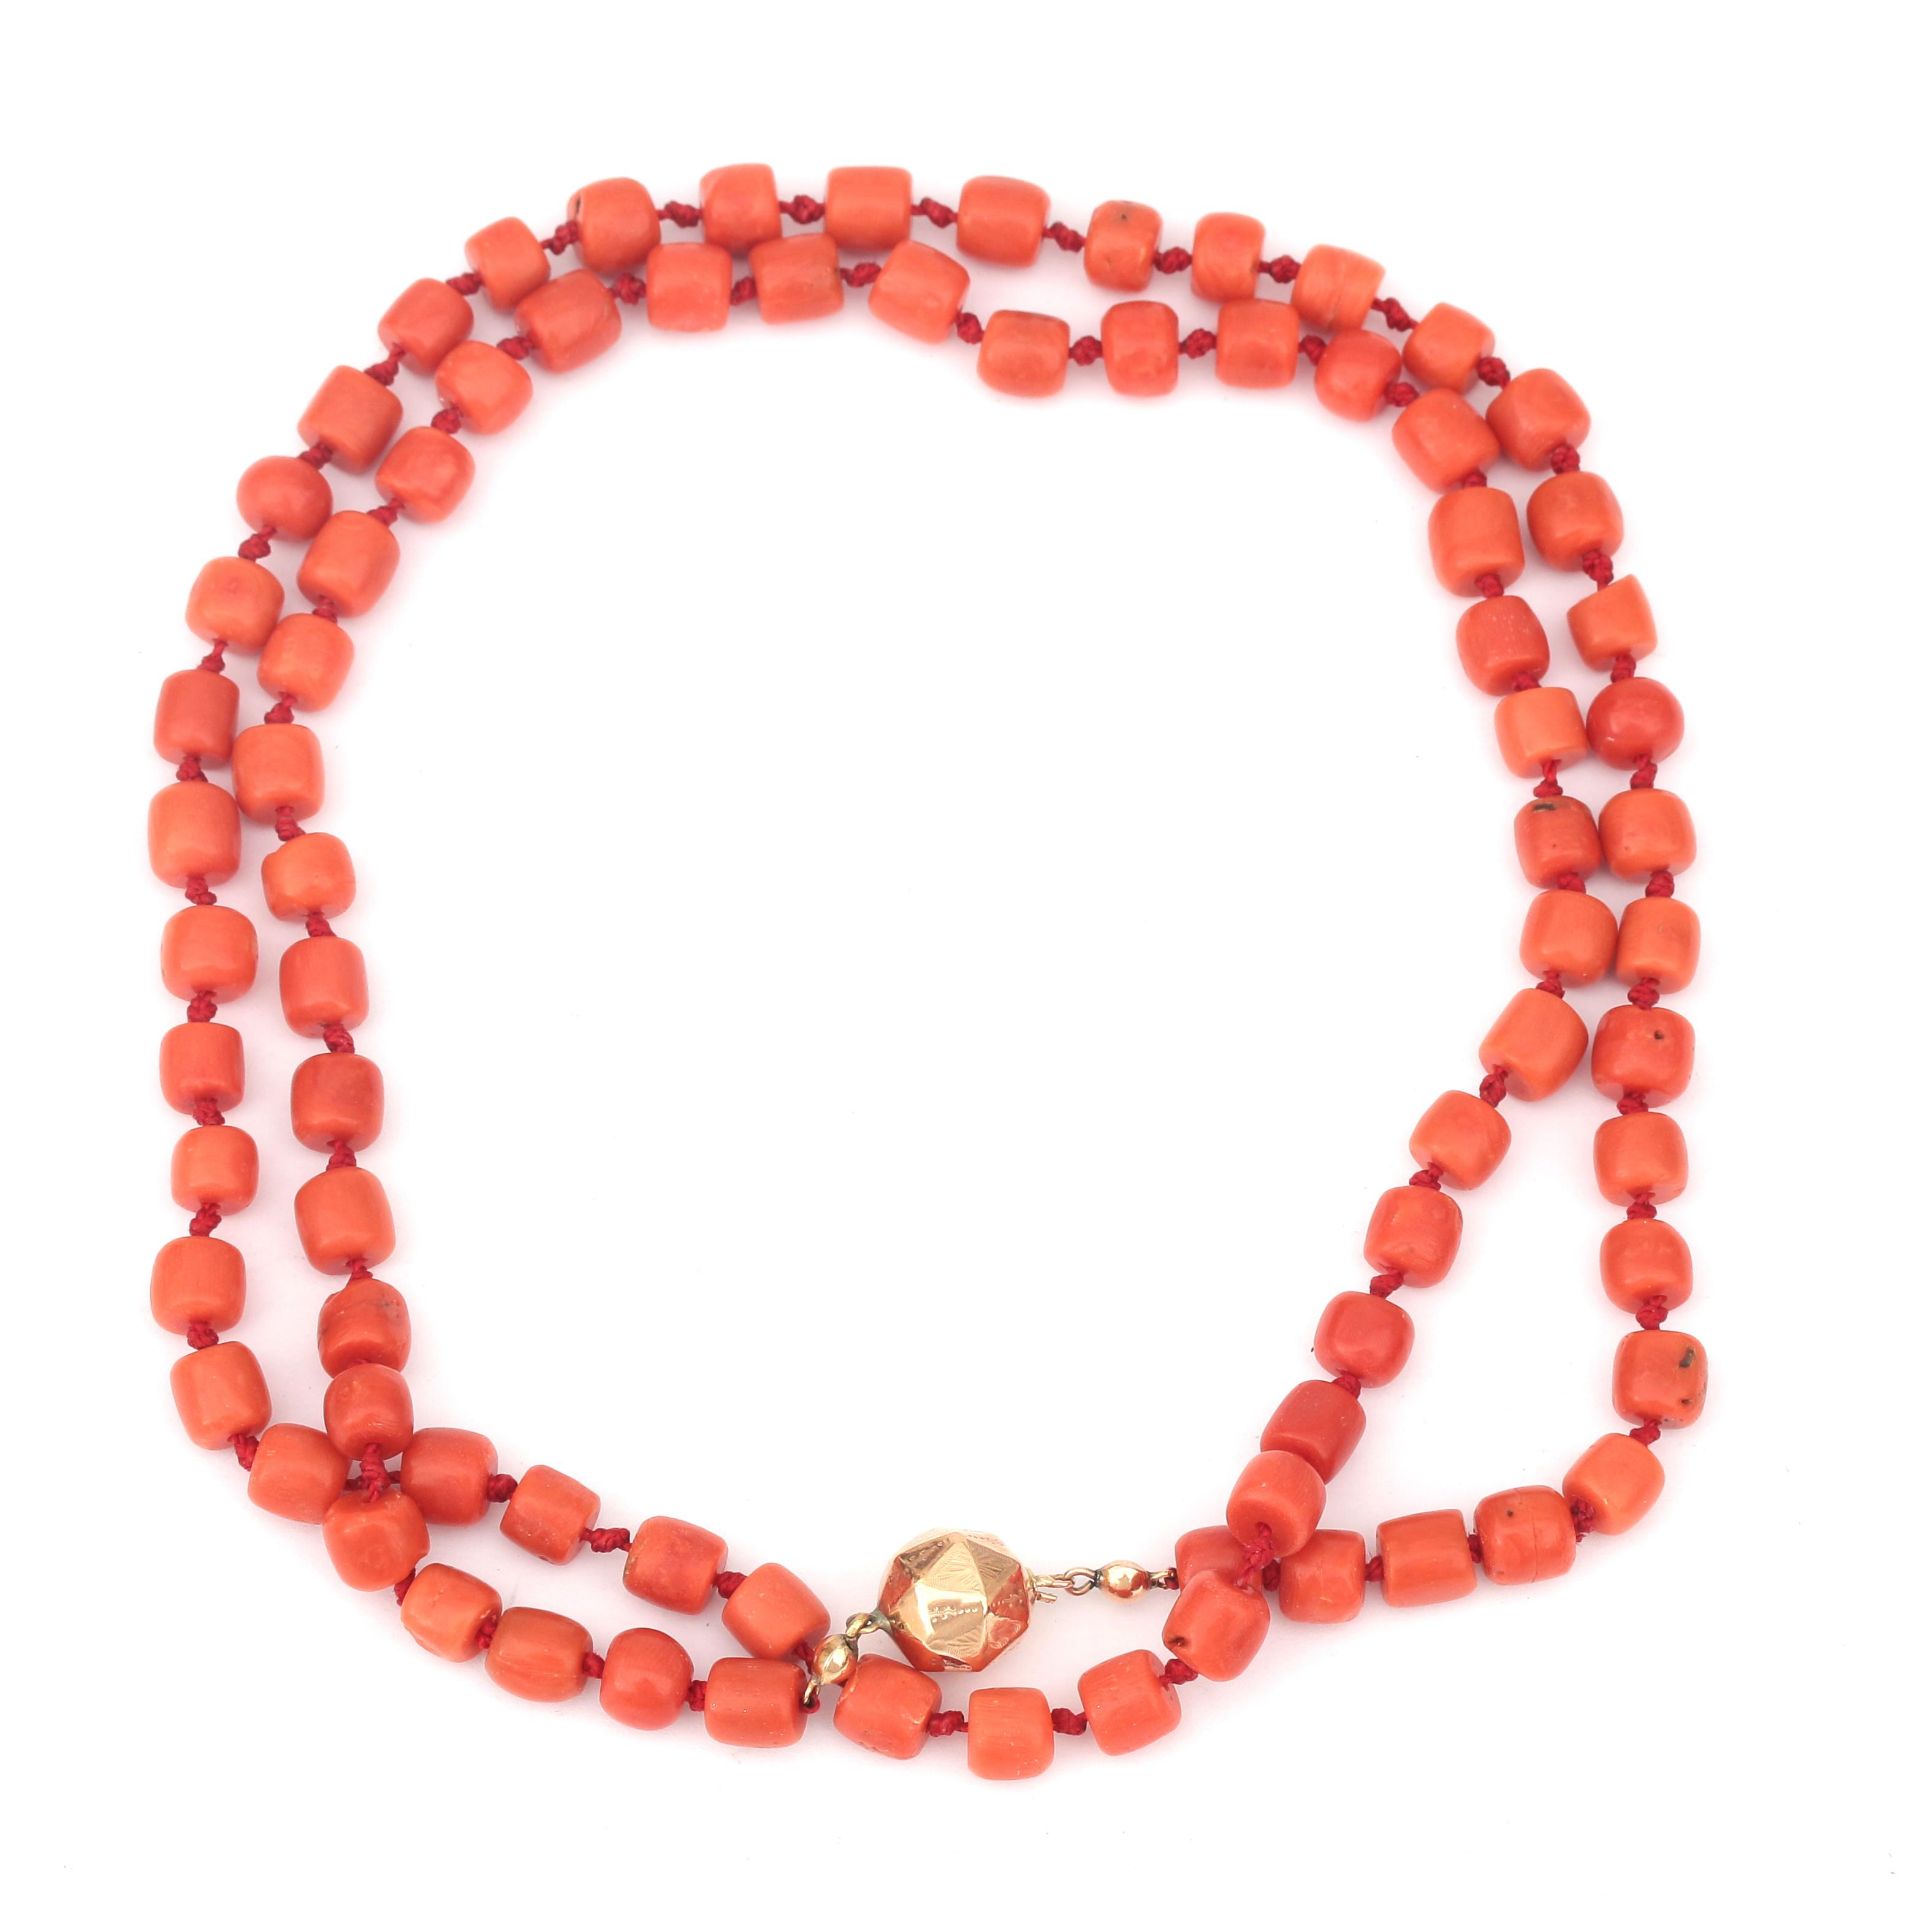 A precious coral bead necklace to a 14 karat gold clasp